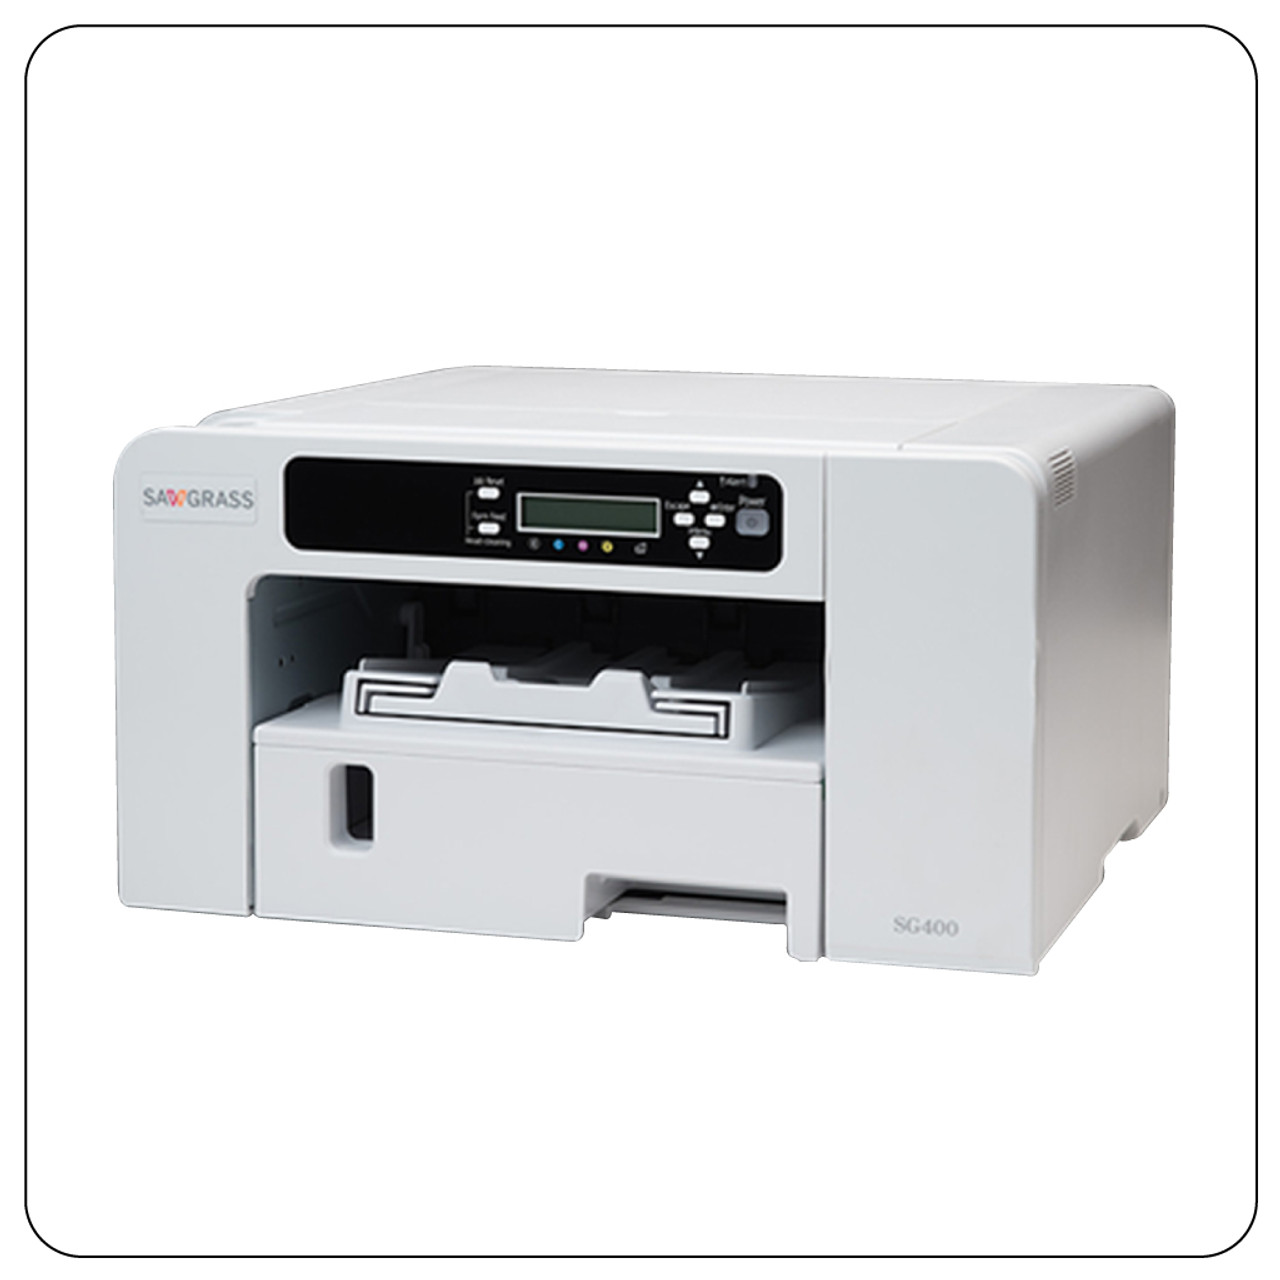 Sawgrass SG500 & SubliJet UHD Starter Kit Bundle for Sublimation Blank Printing, Samples, Subli Ink, Bypass Tray, Heat Tape & Dispenser, Beginners